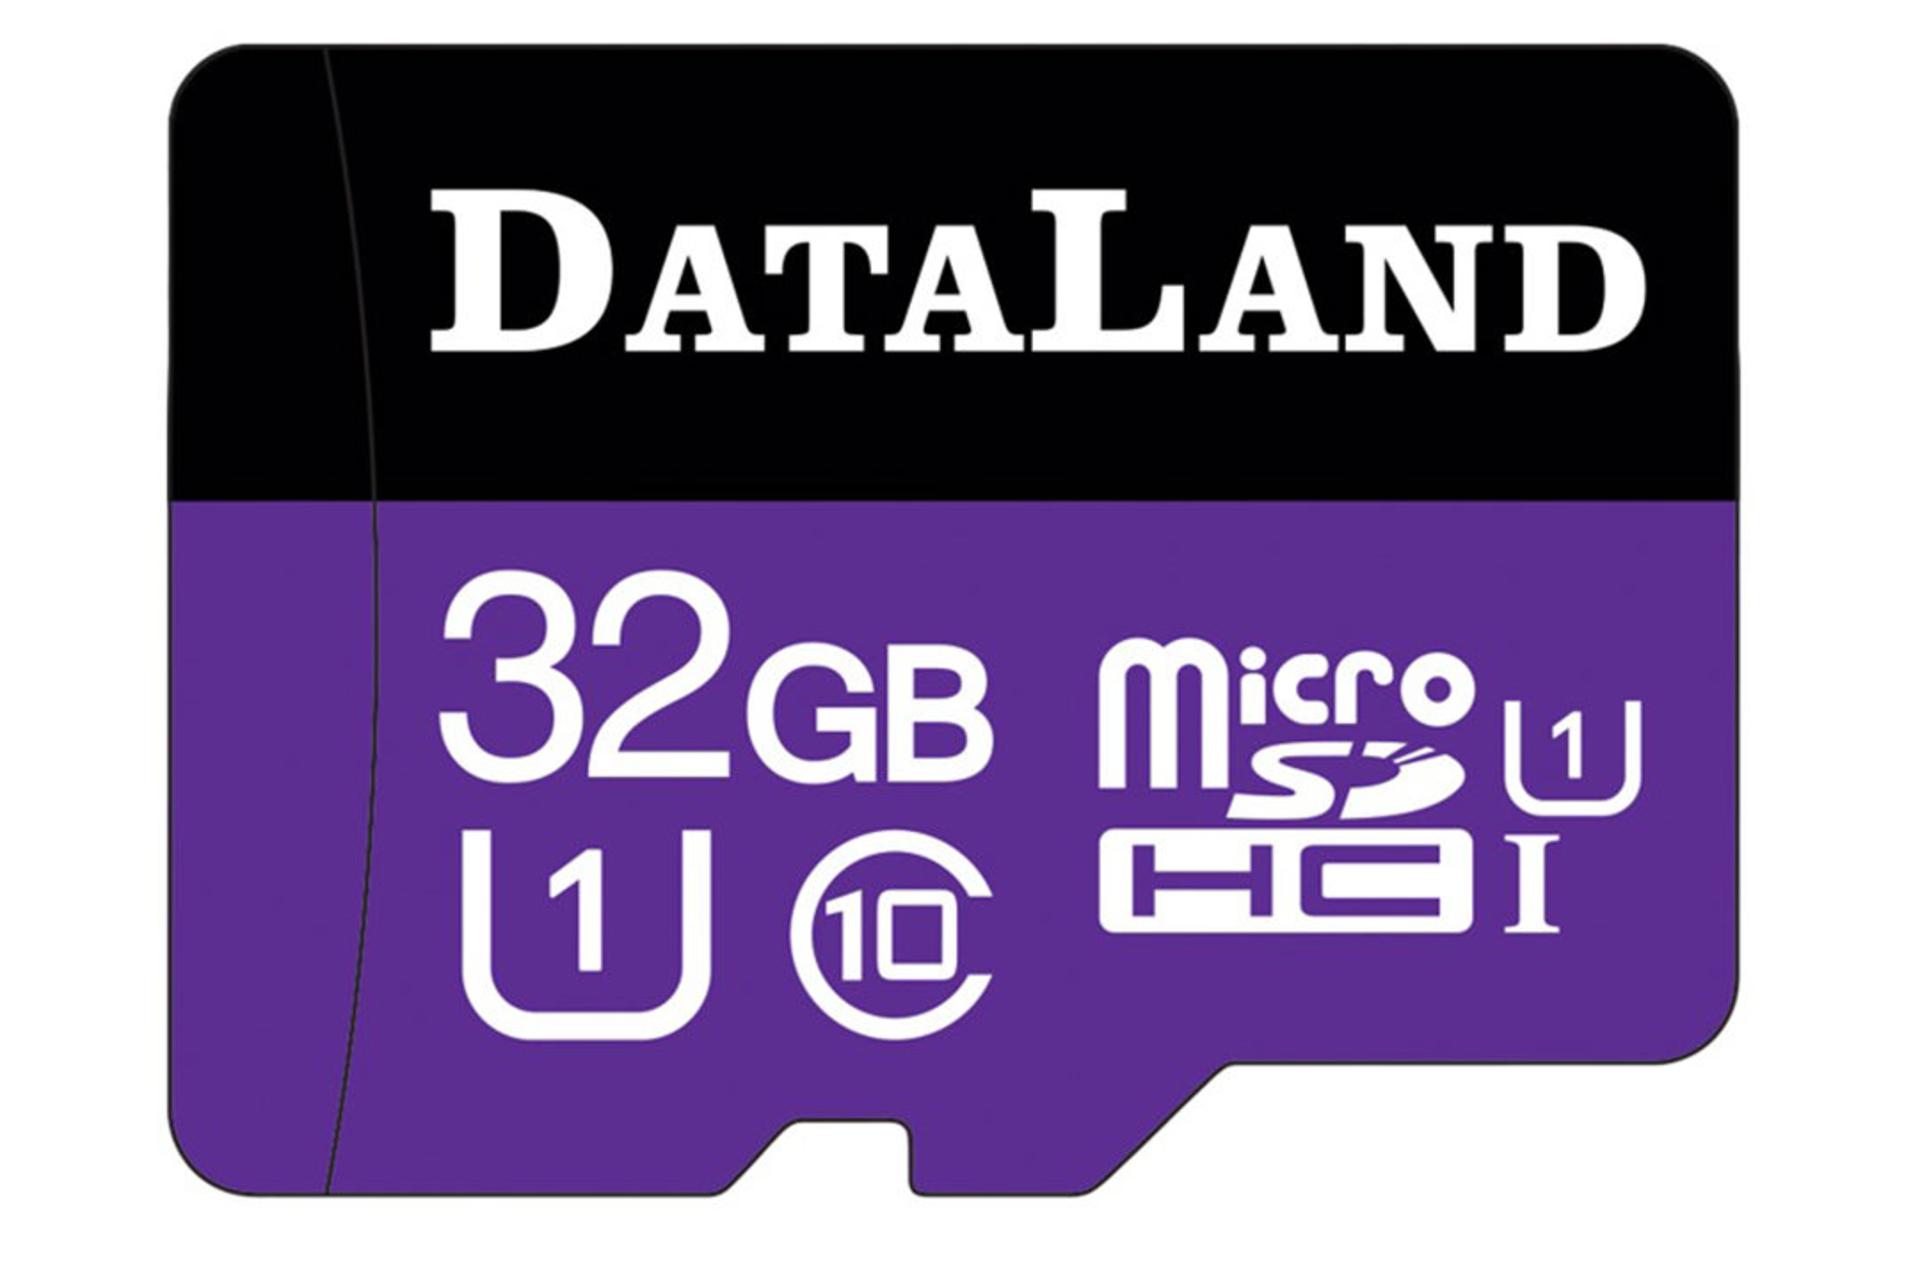 DataLand 533x microSDHC Class 10 UHS-I U1 32GB